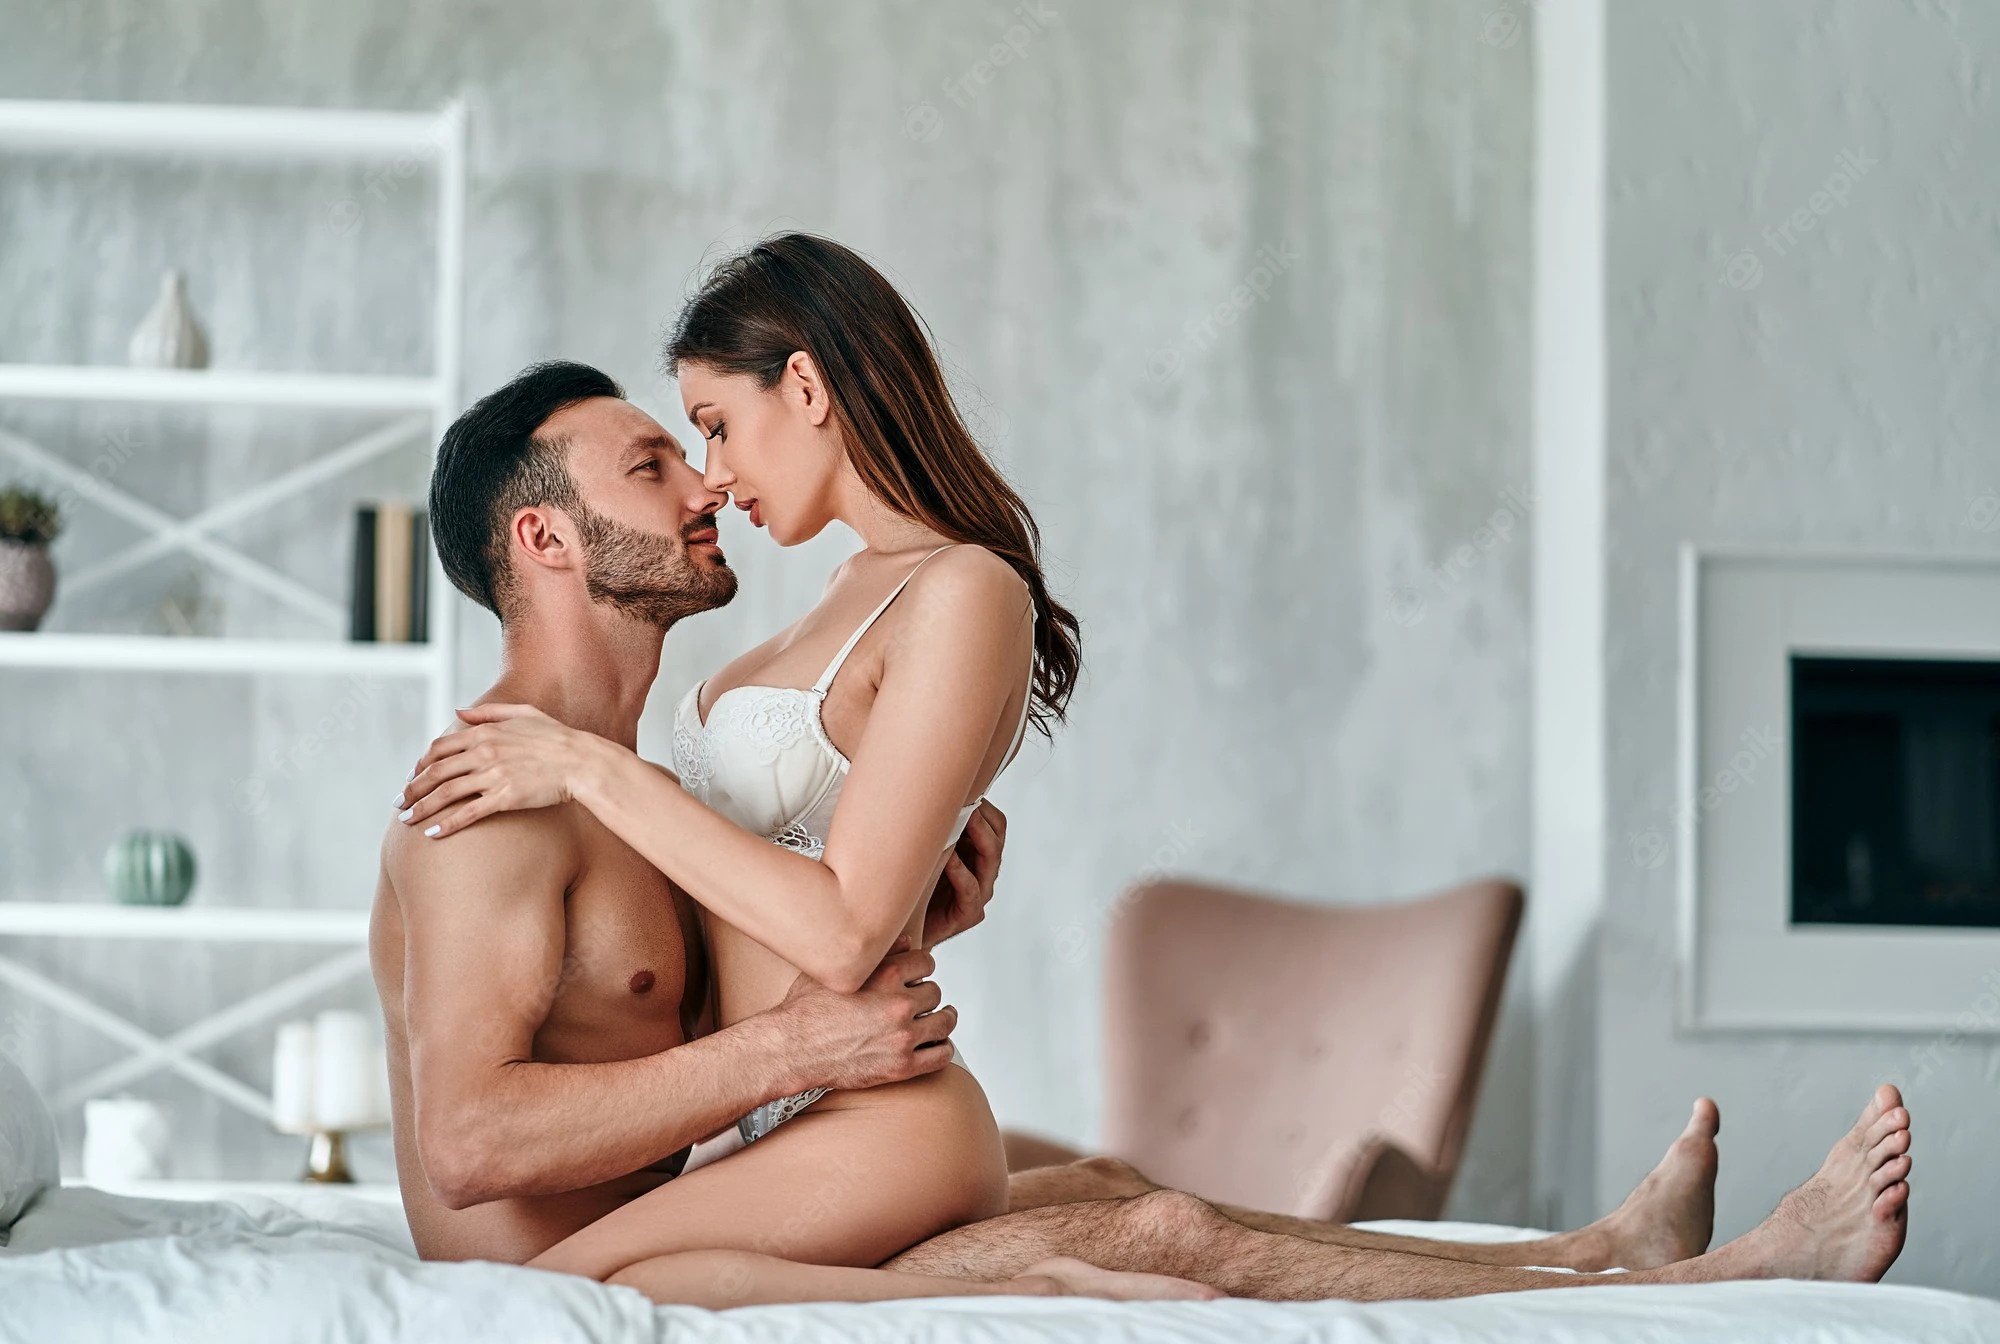 Romantic - Top 2 Best Sites To Watch Romantic Porn Videos 2022